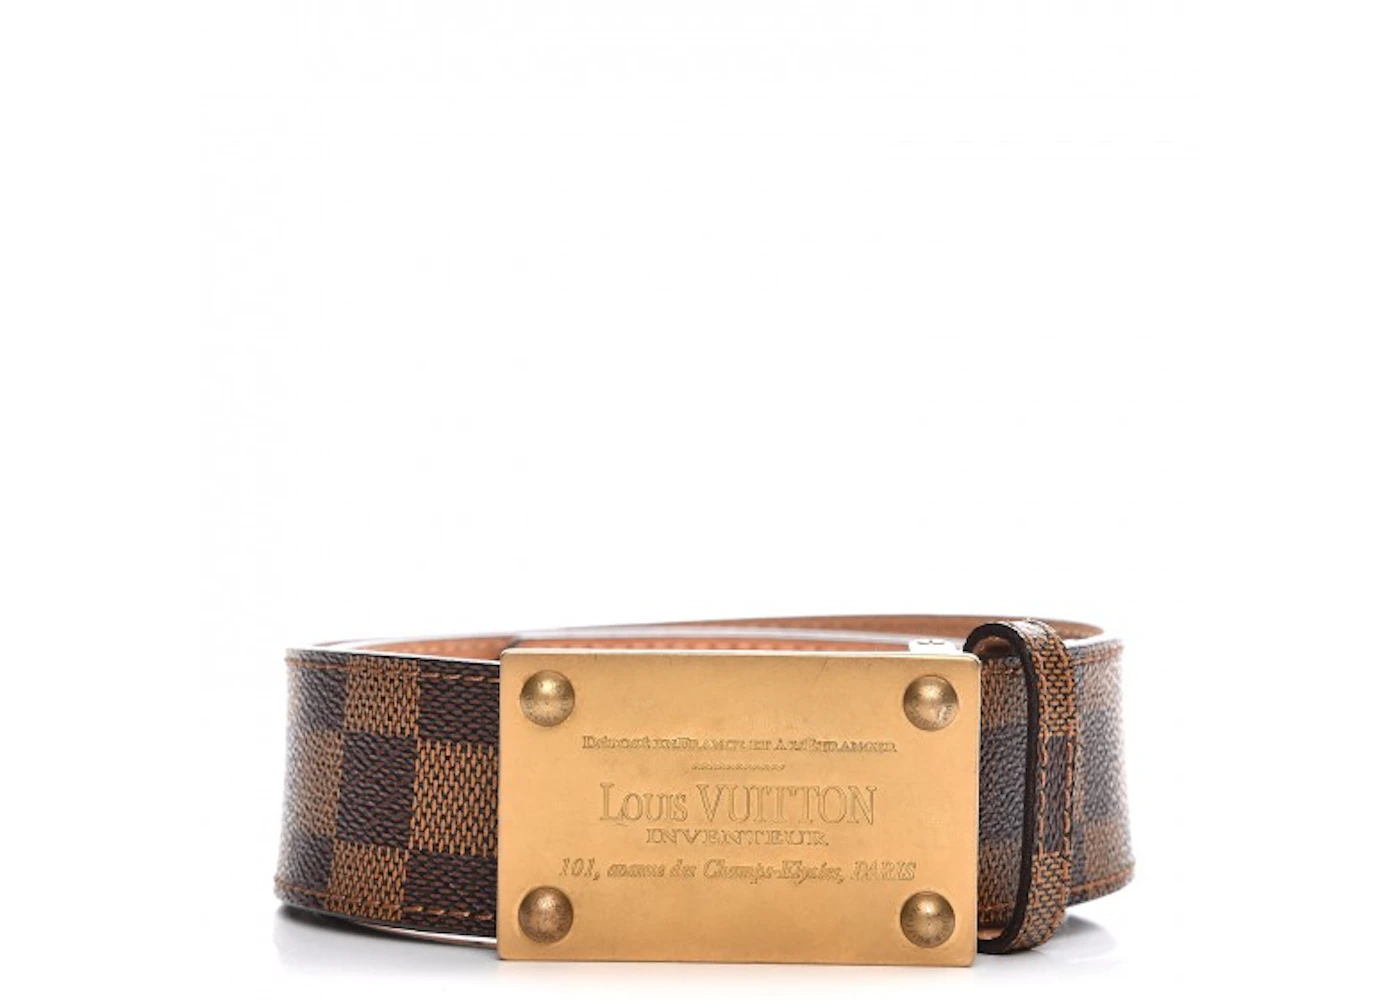 Louis Vuitton Inventeur Belt Buckle - For Sale on 1stDibs